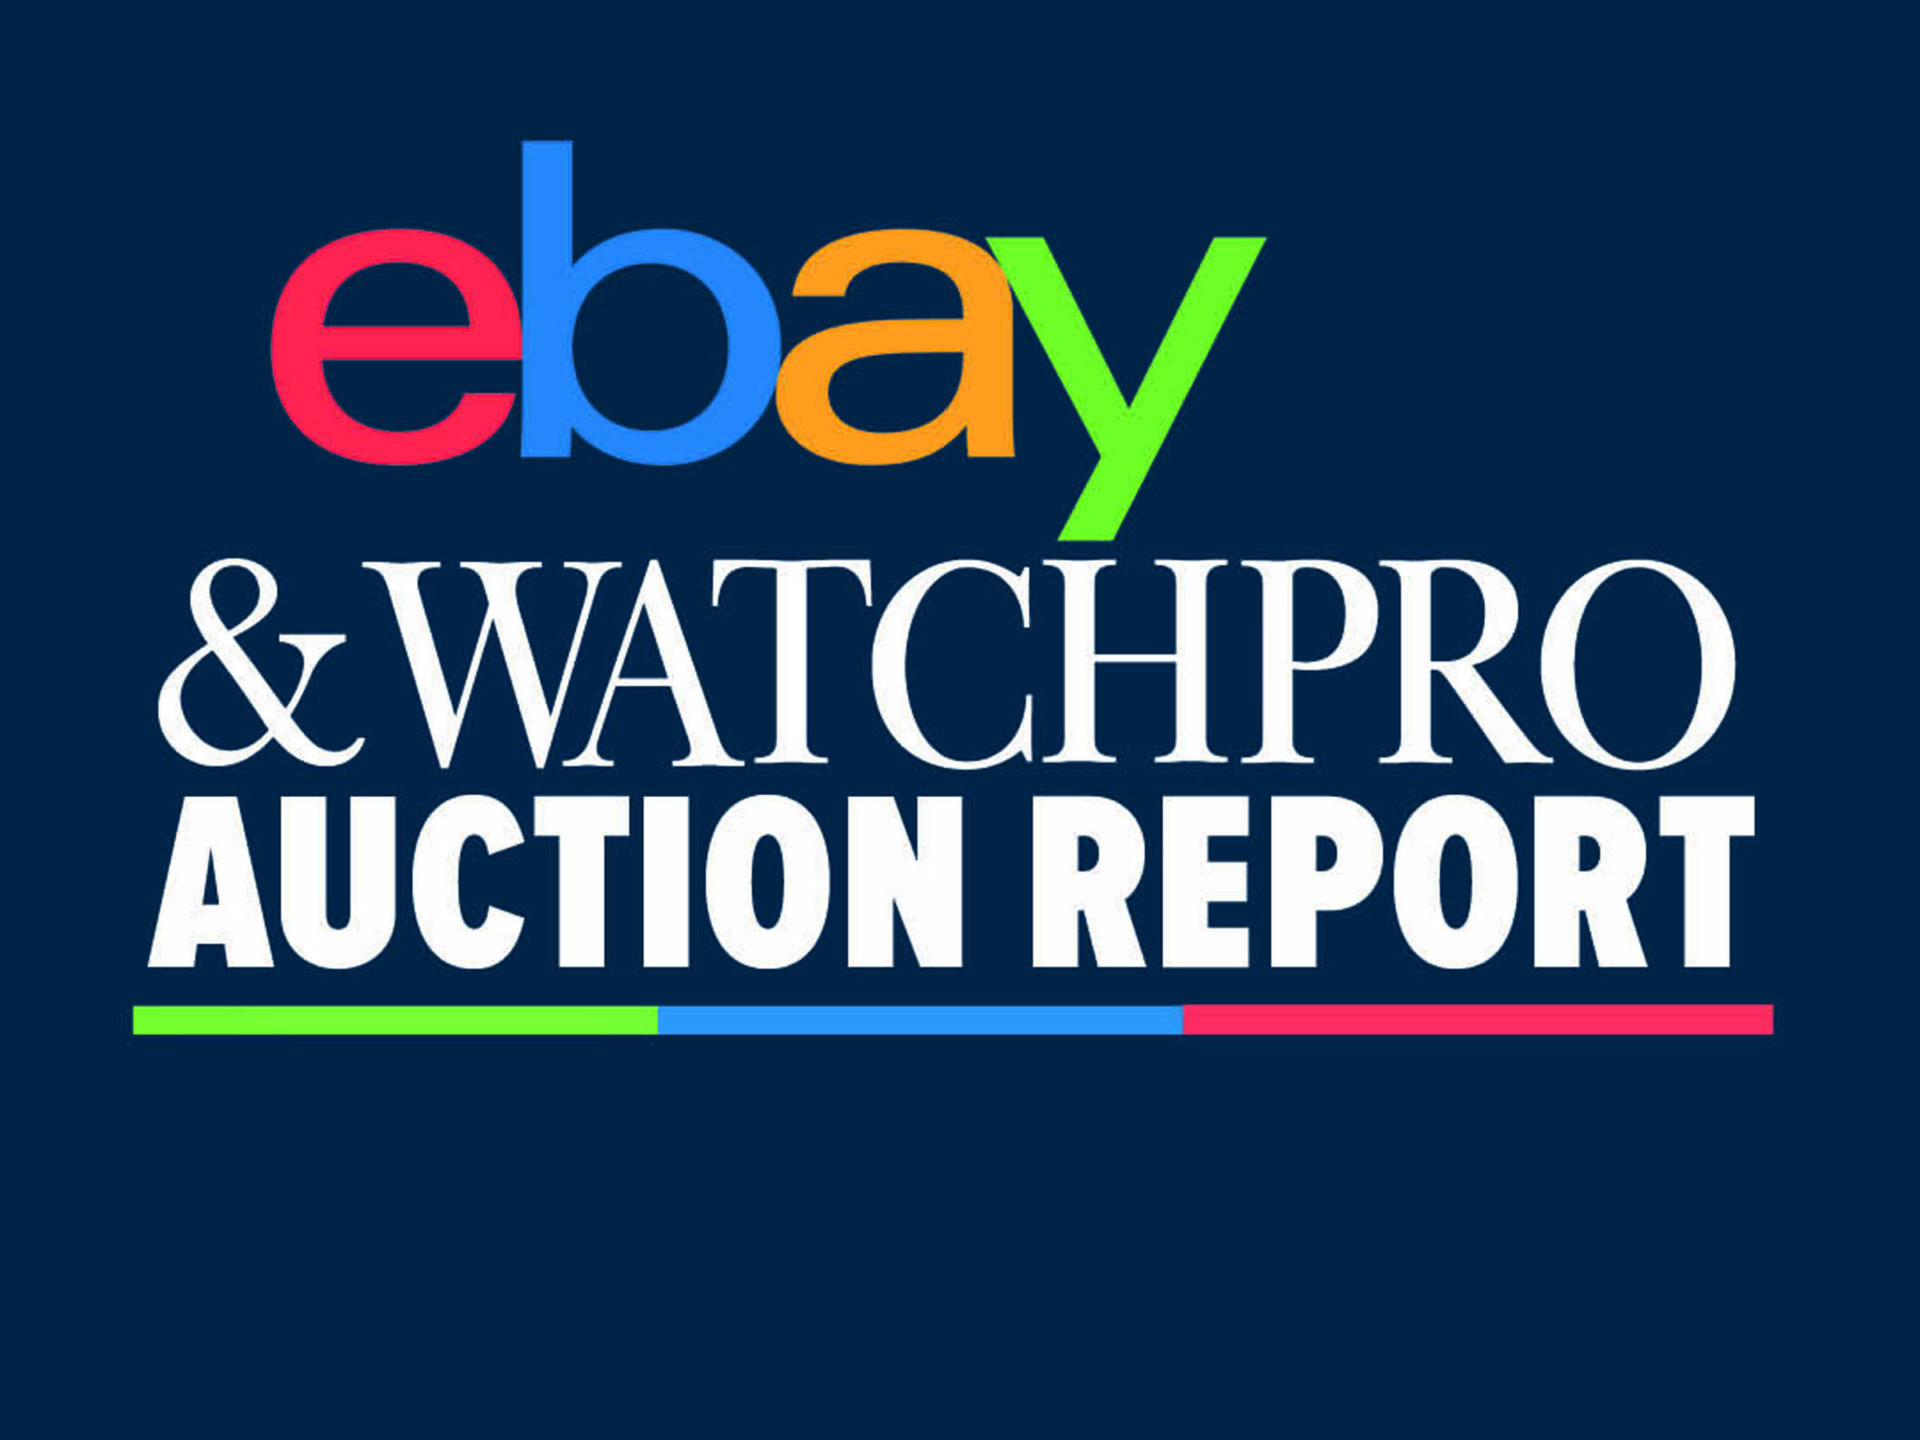 Ebay auction report